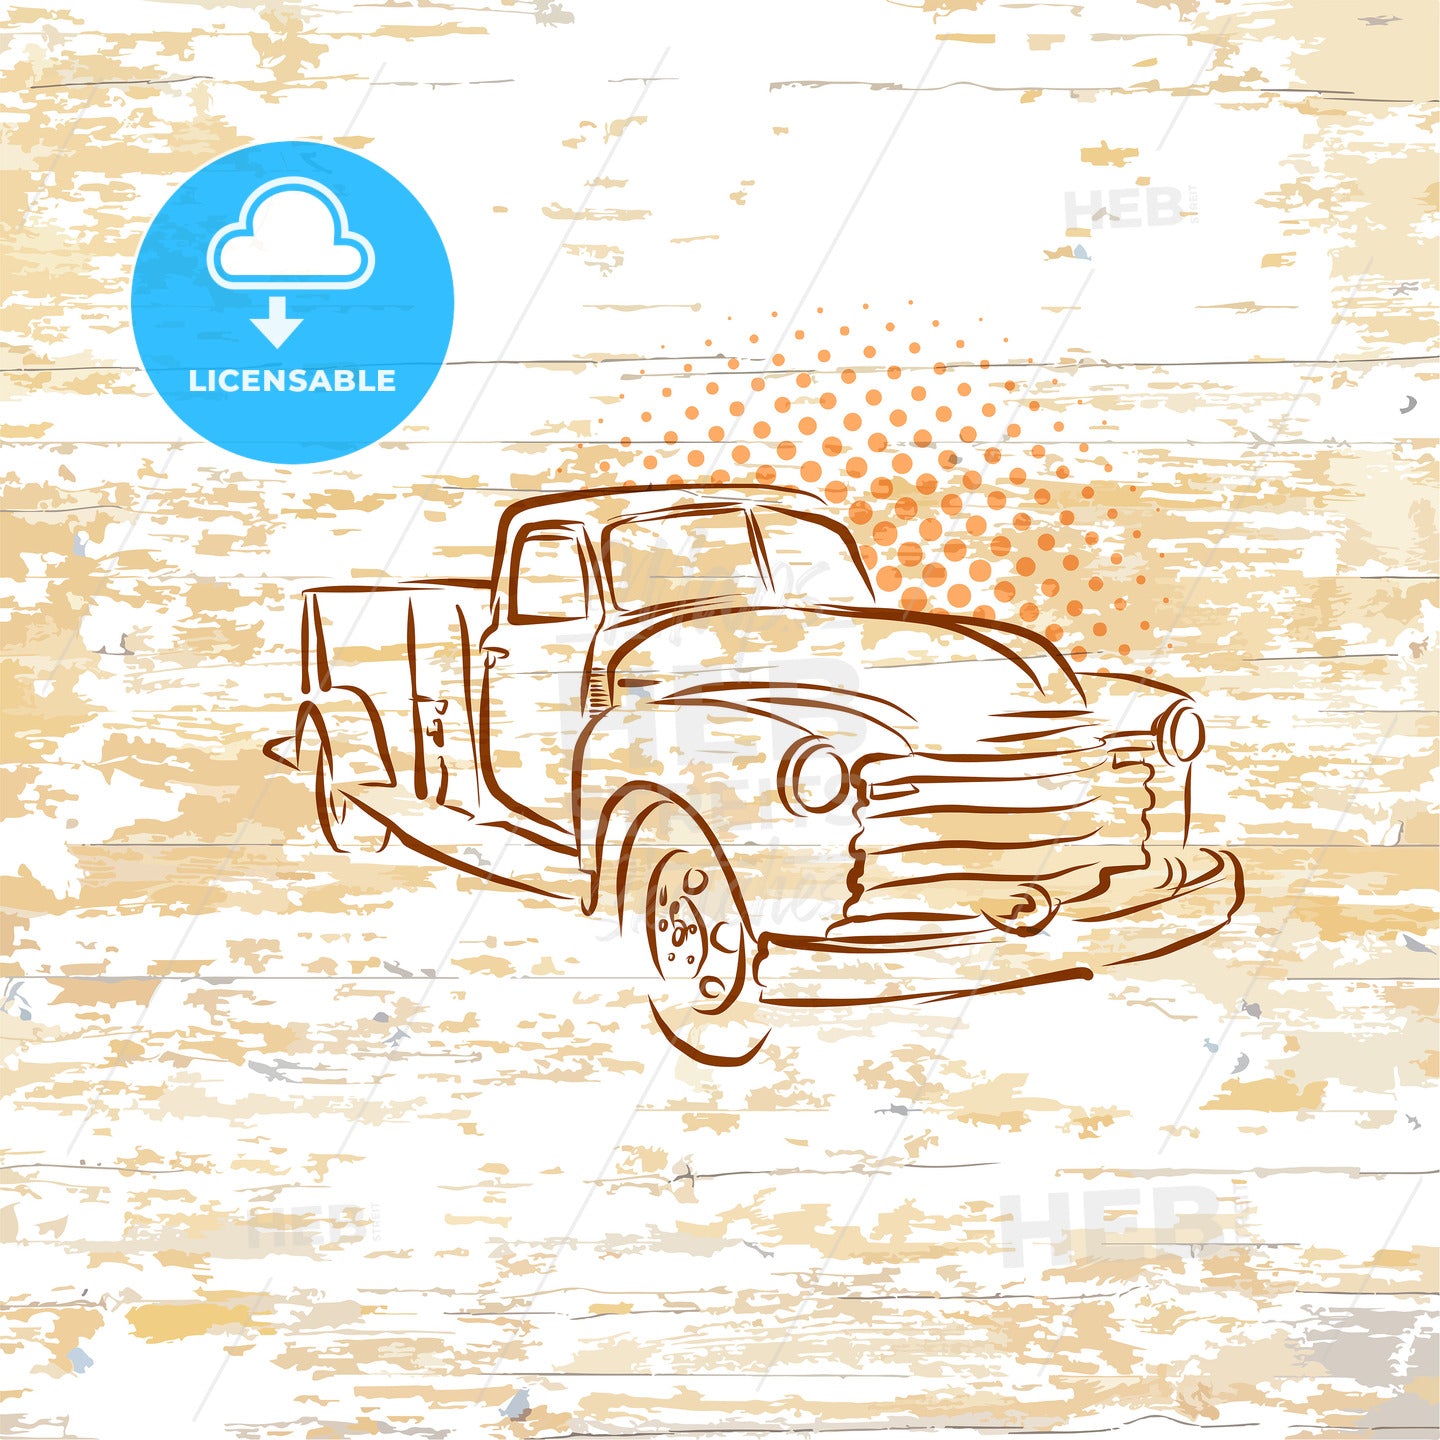 Vintage pickup truck on wooden background – instant download